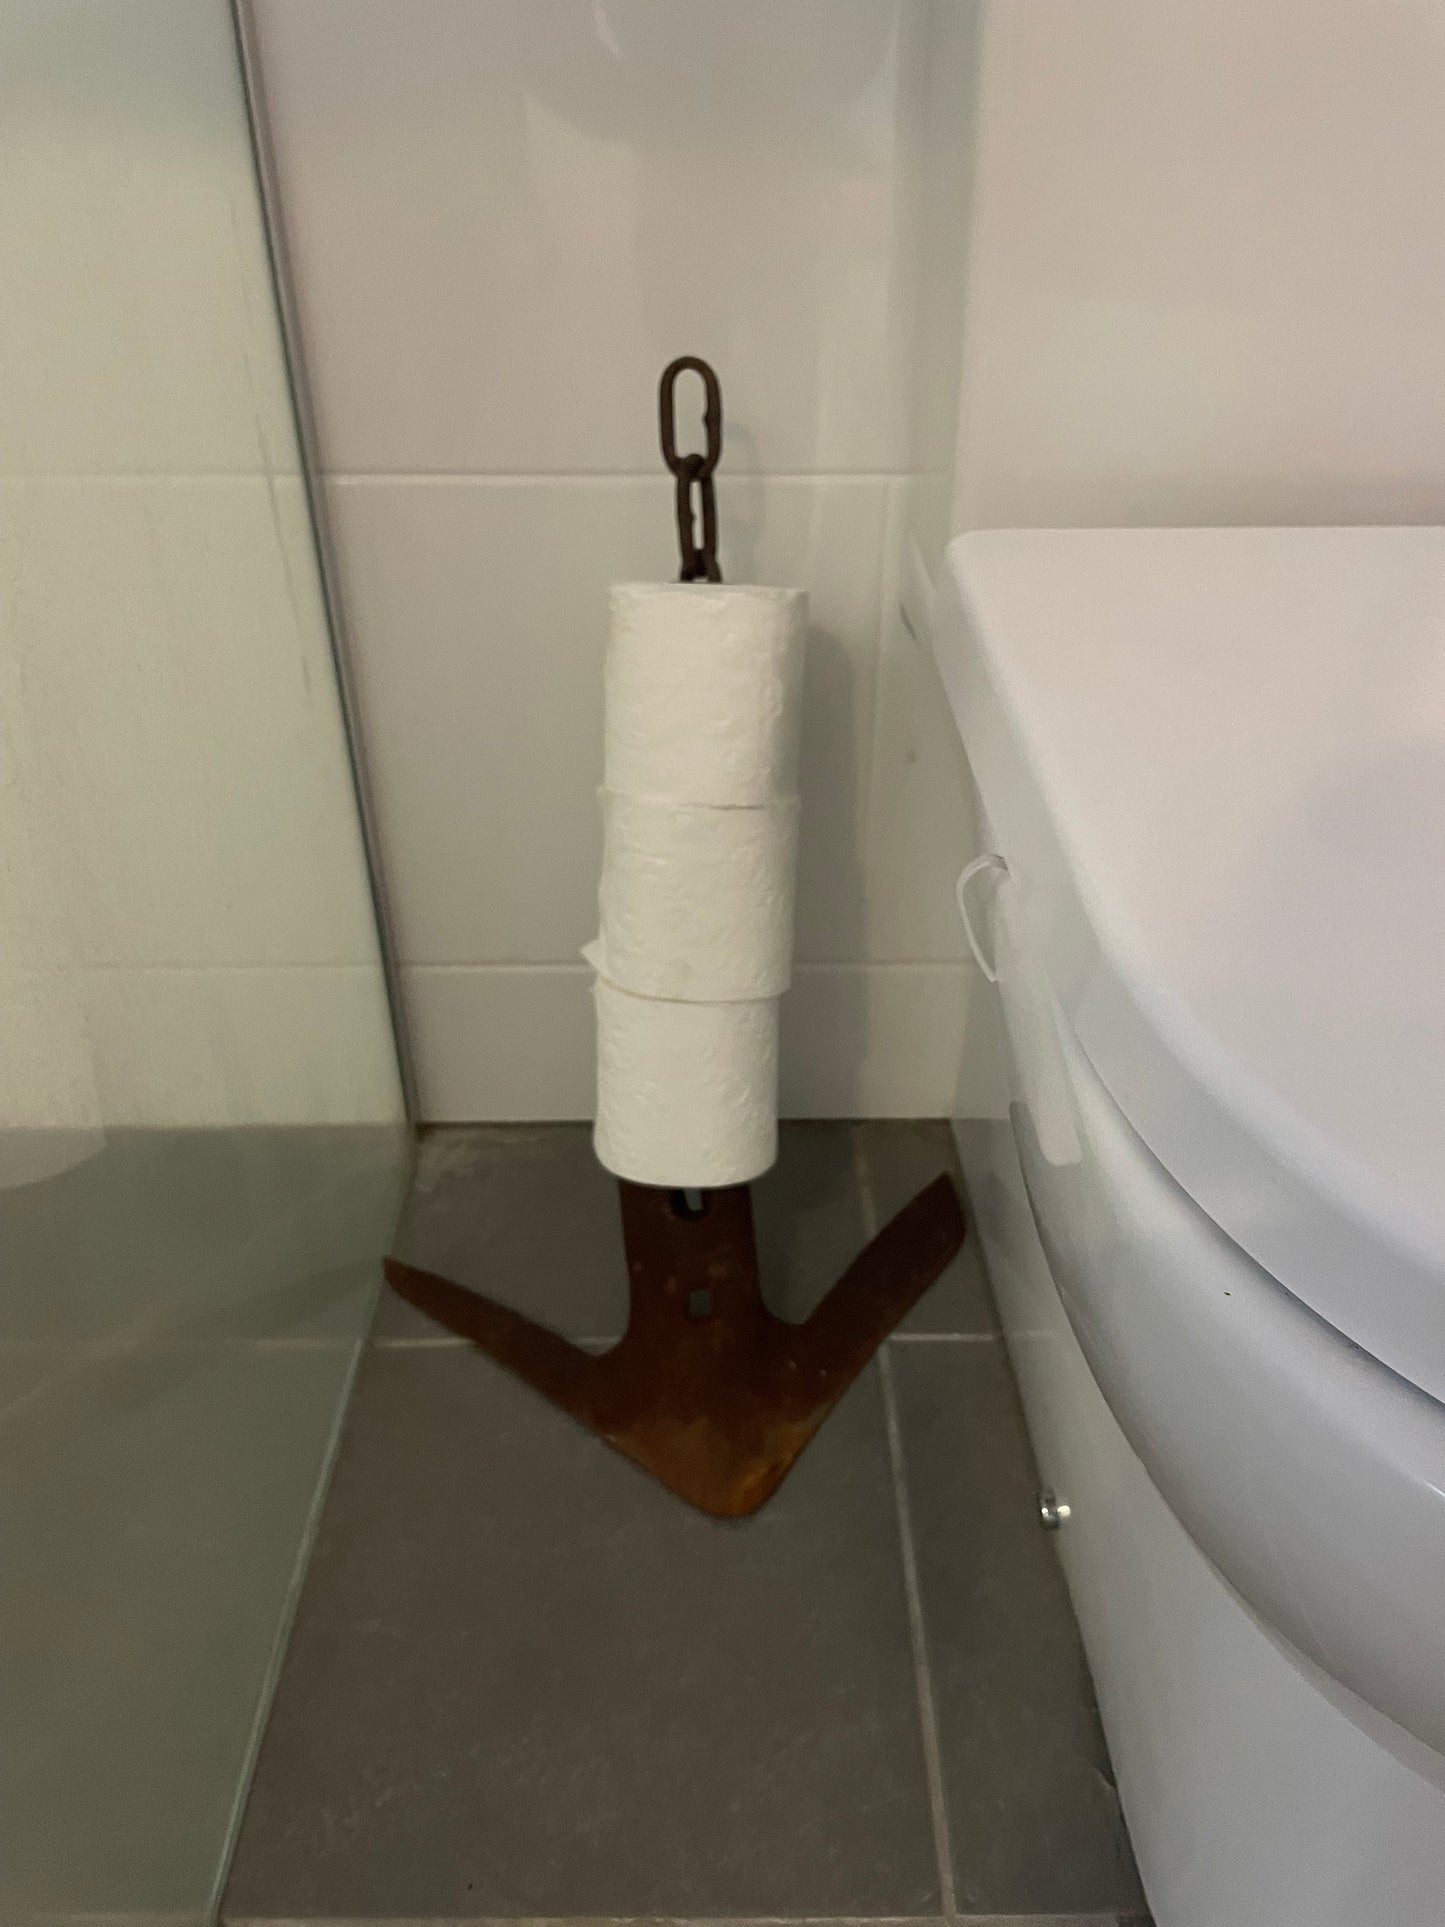 Rustic Toilet Roll Holder